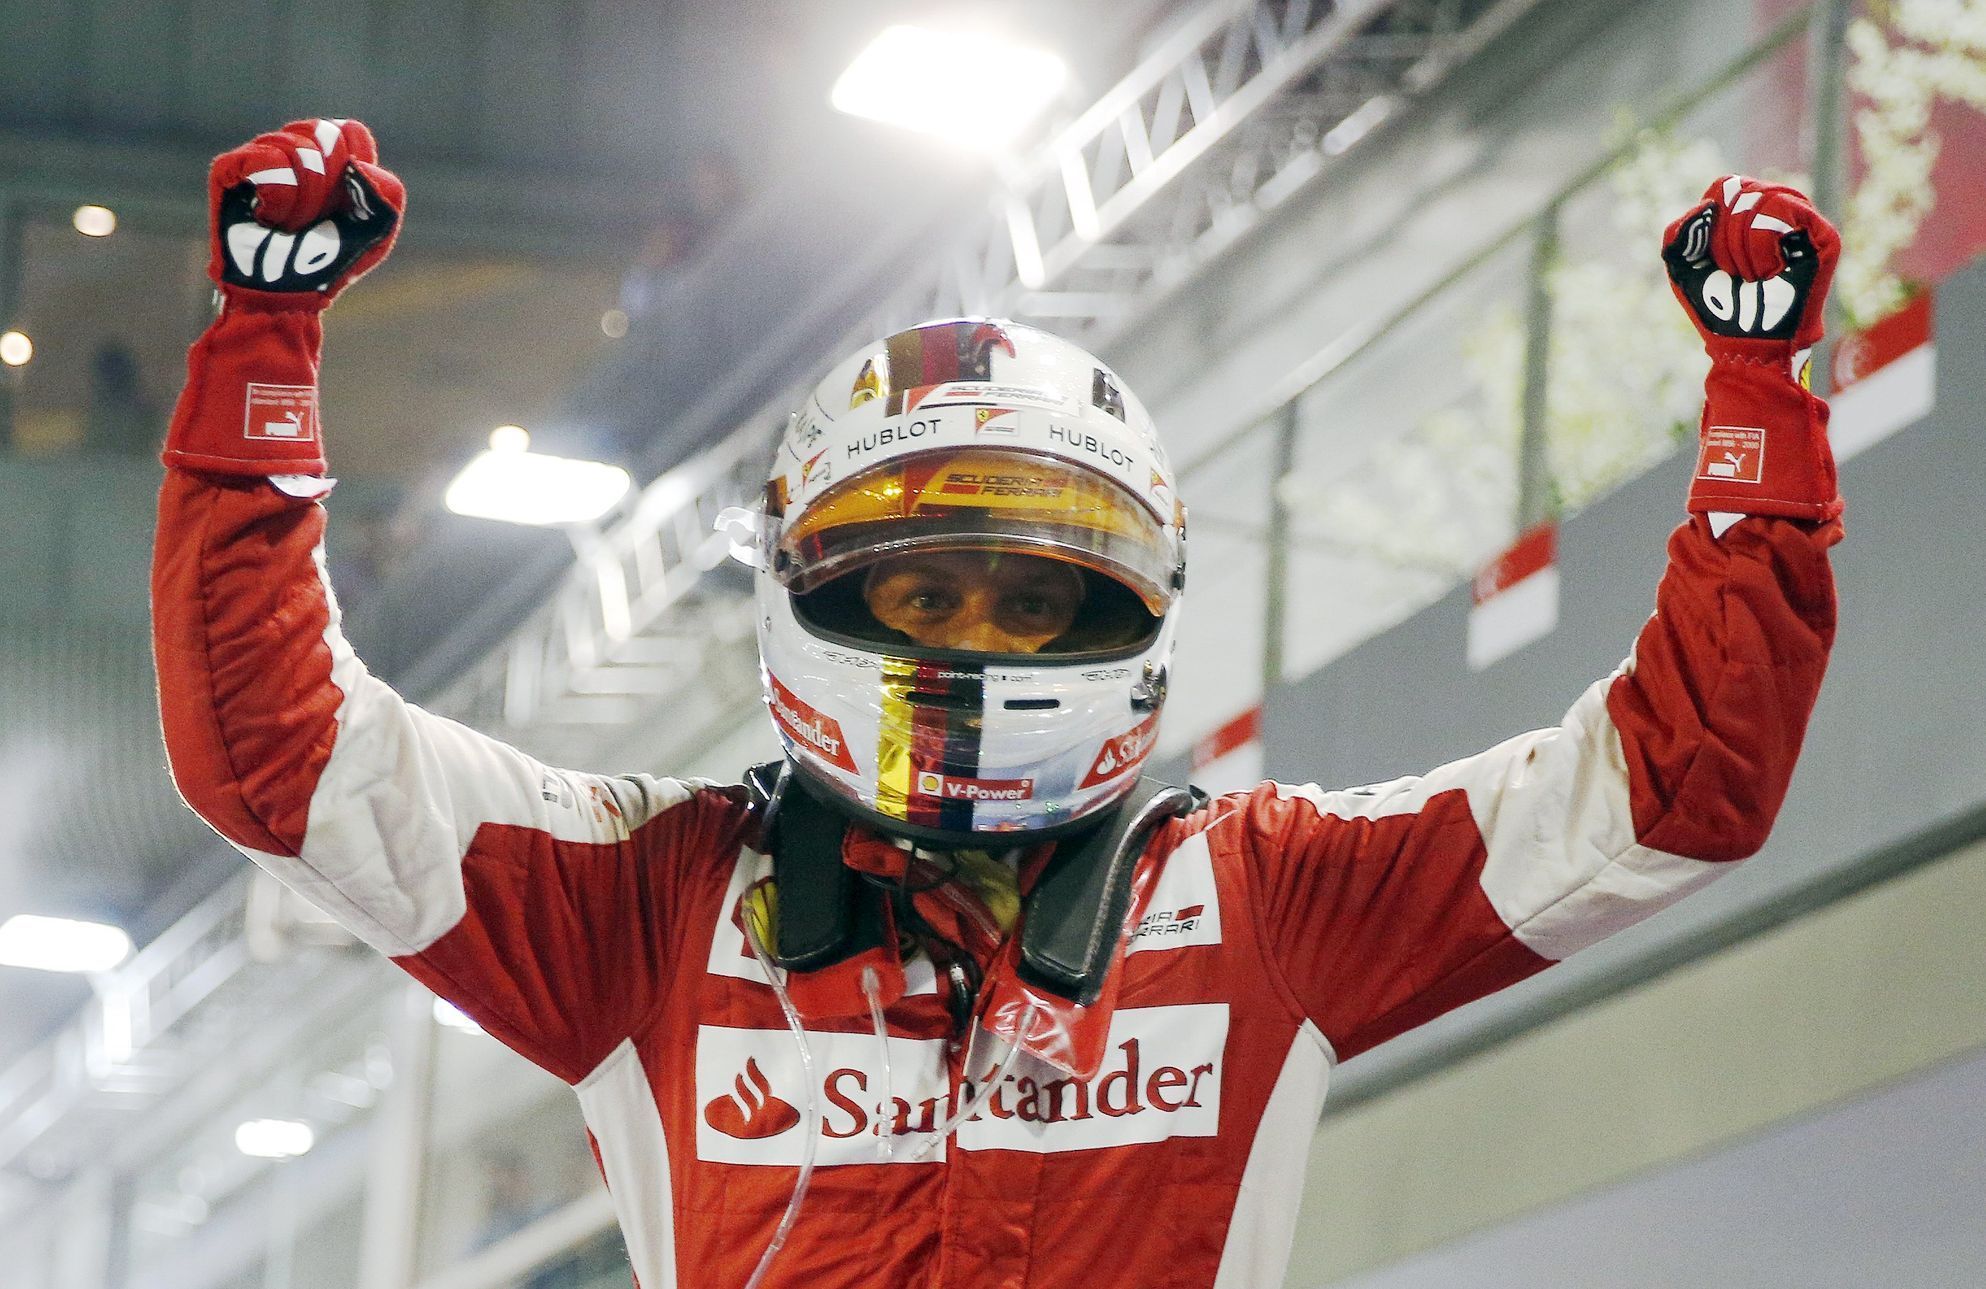 Ferrari Formula One driver Vettel of Germany reacts after winning the Singapore F1 Grand Prix